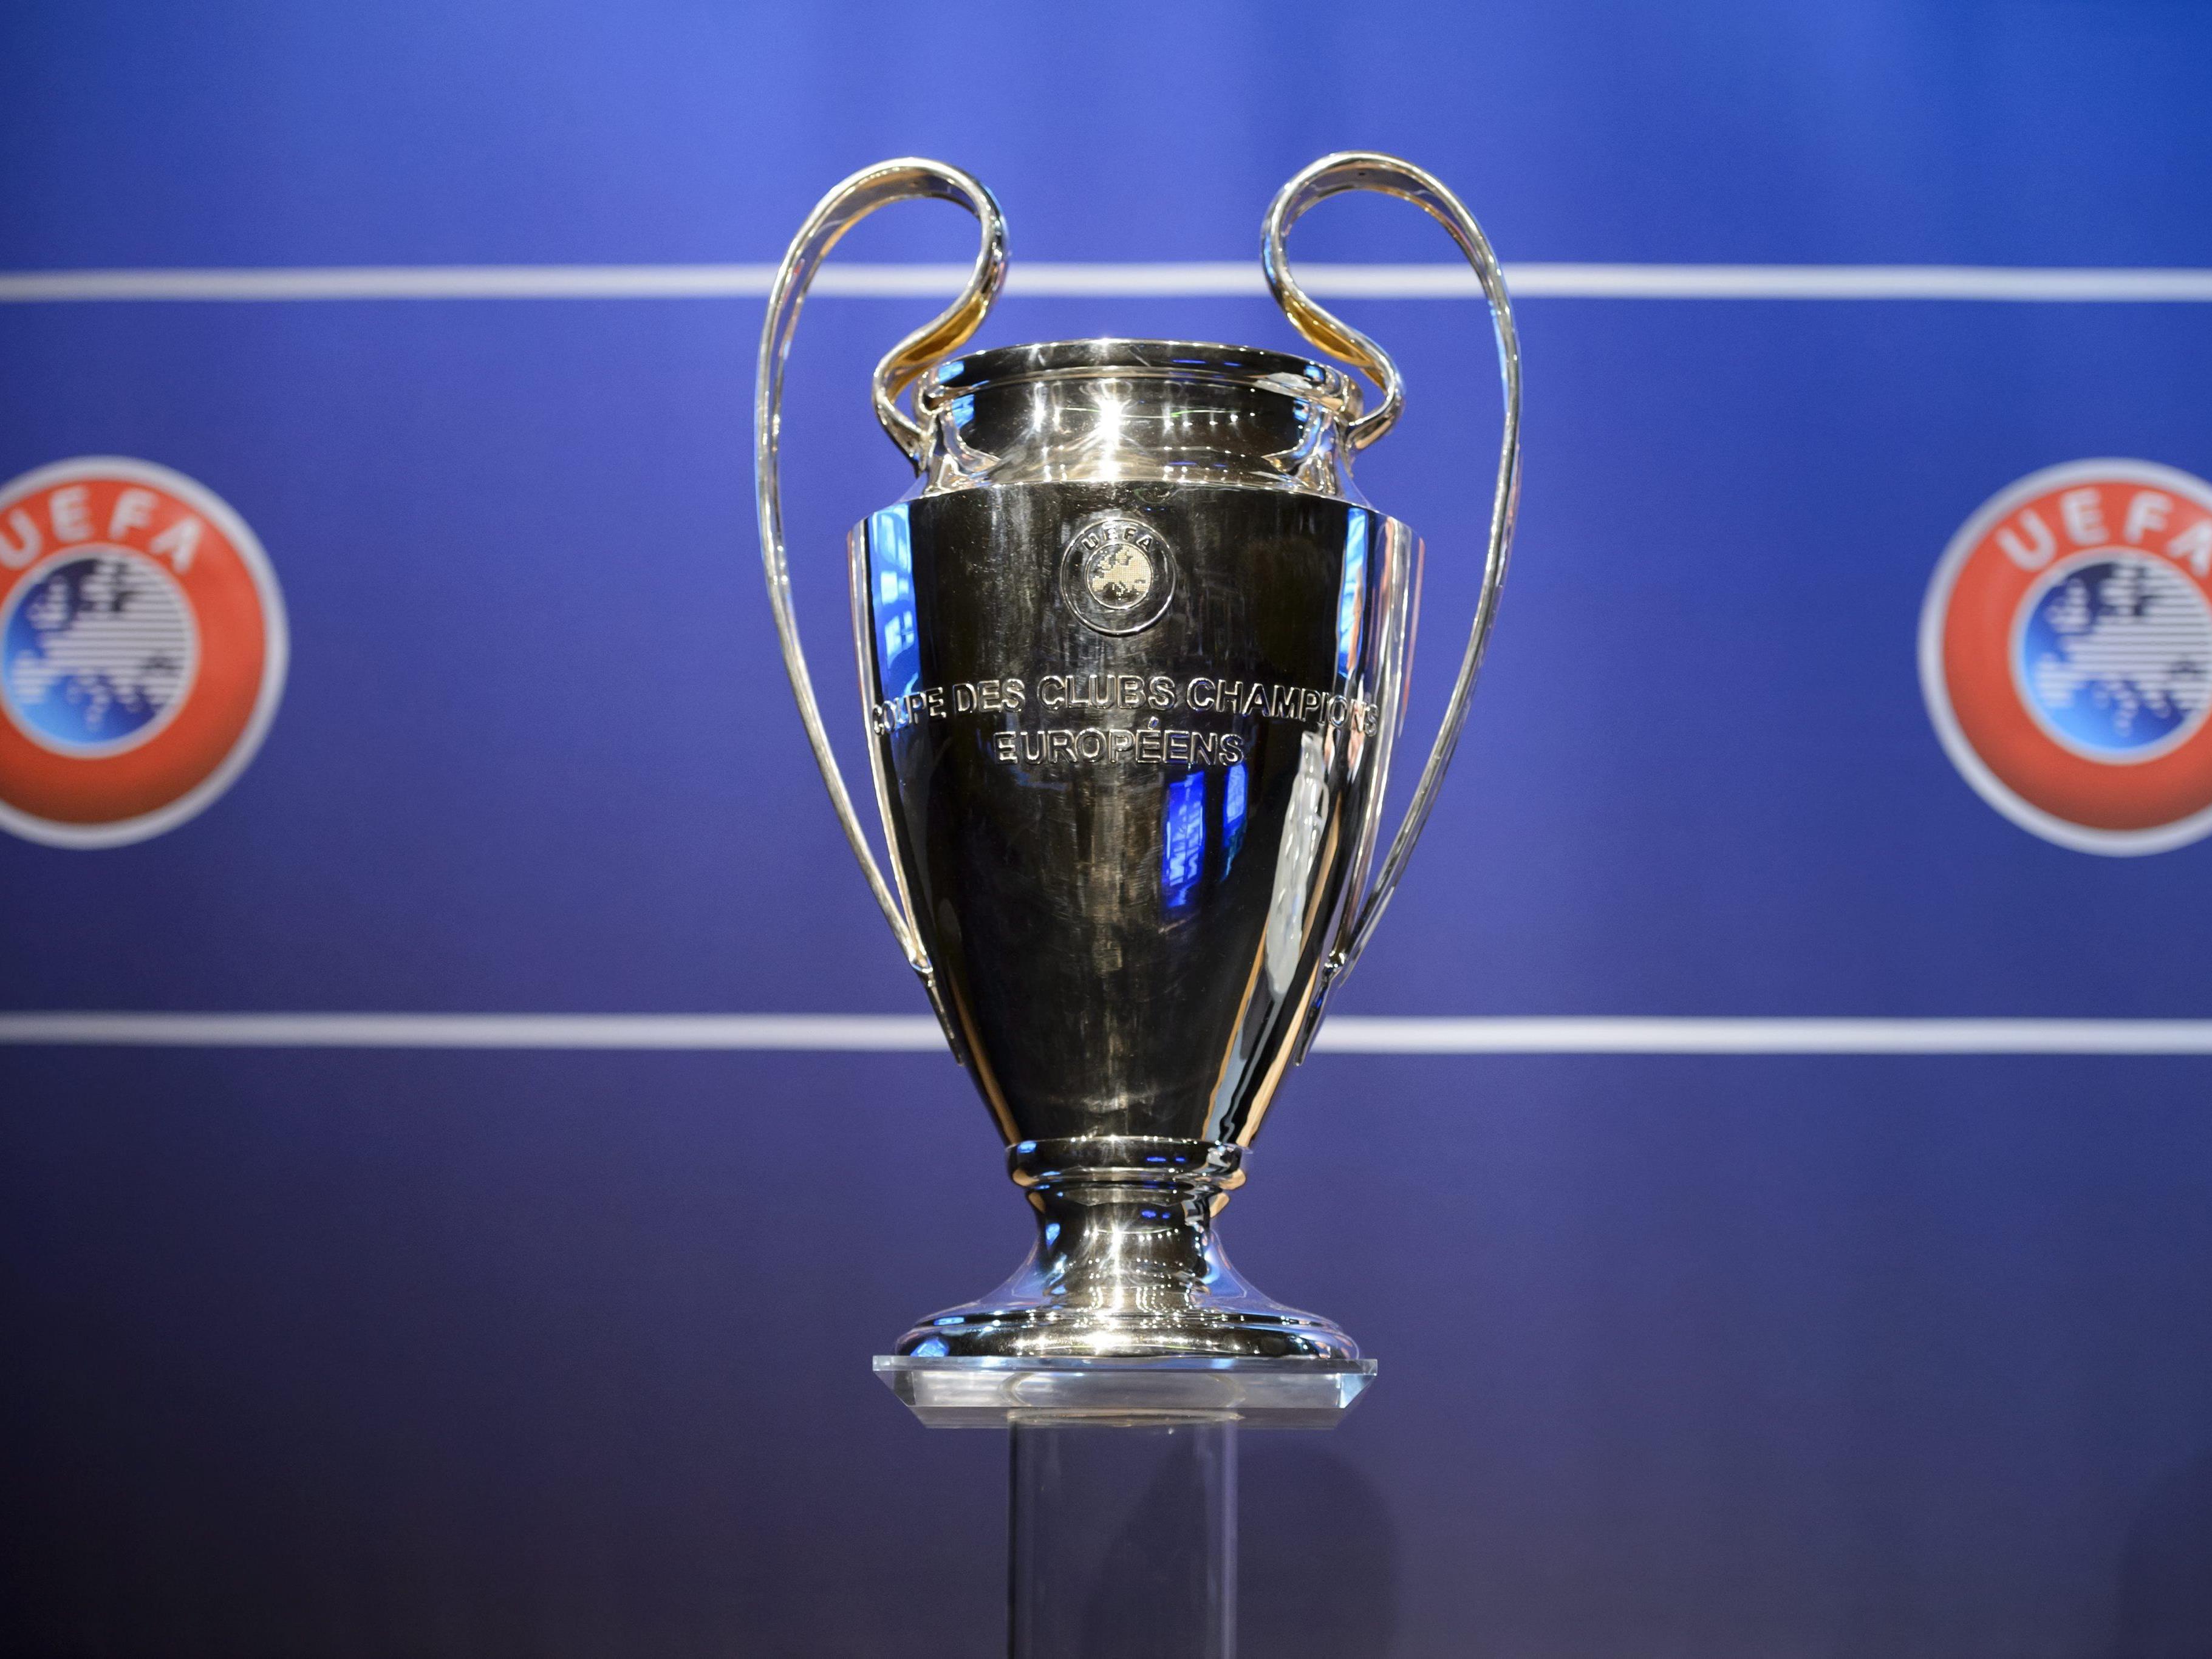 Champions League Pokal Am Hof In Wien Ausgestellt Vienna Online